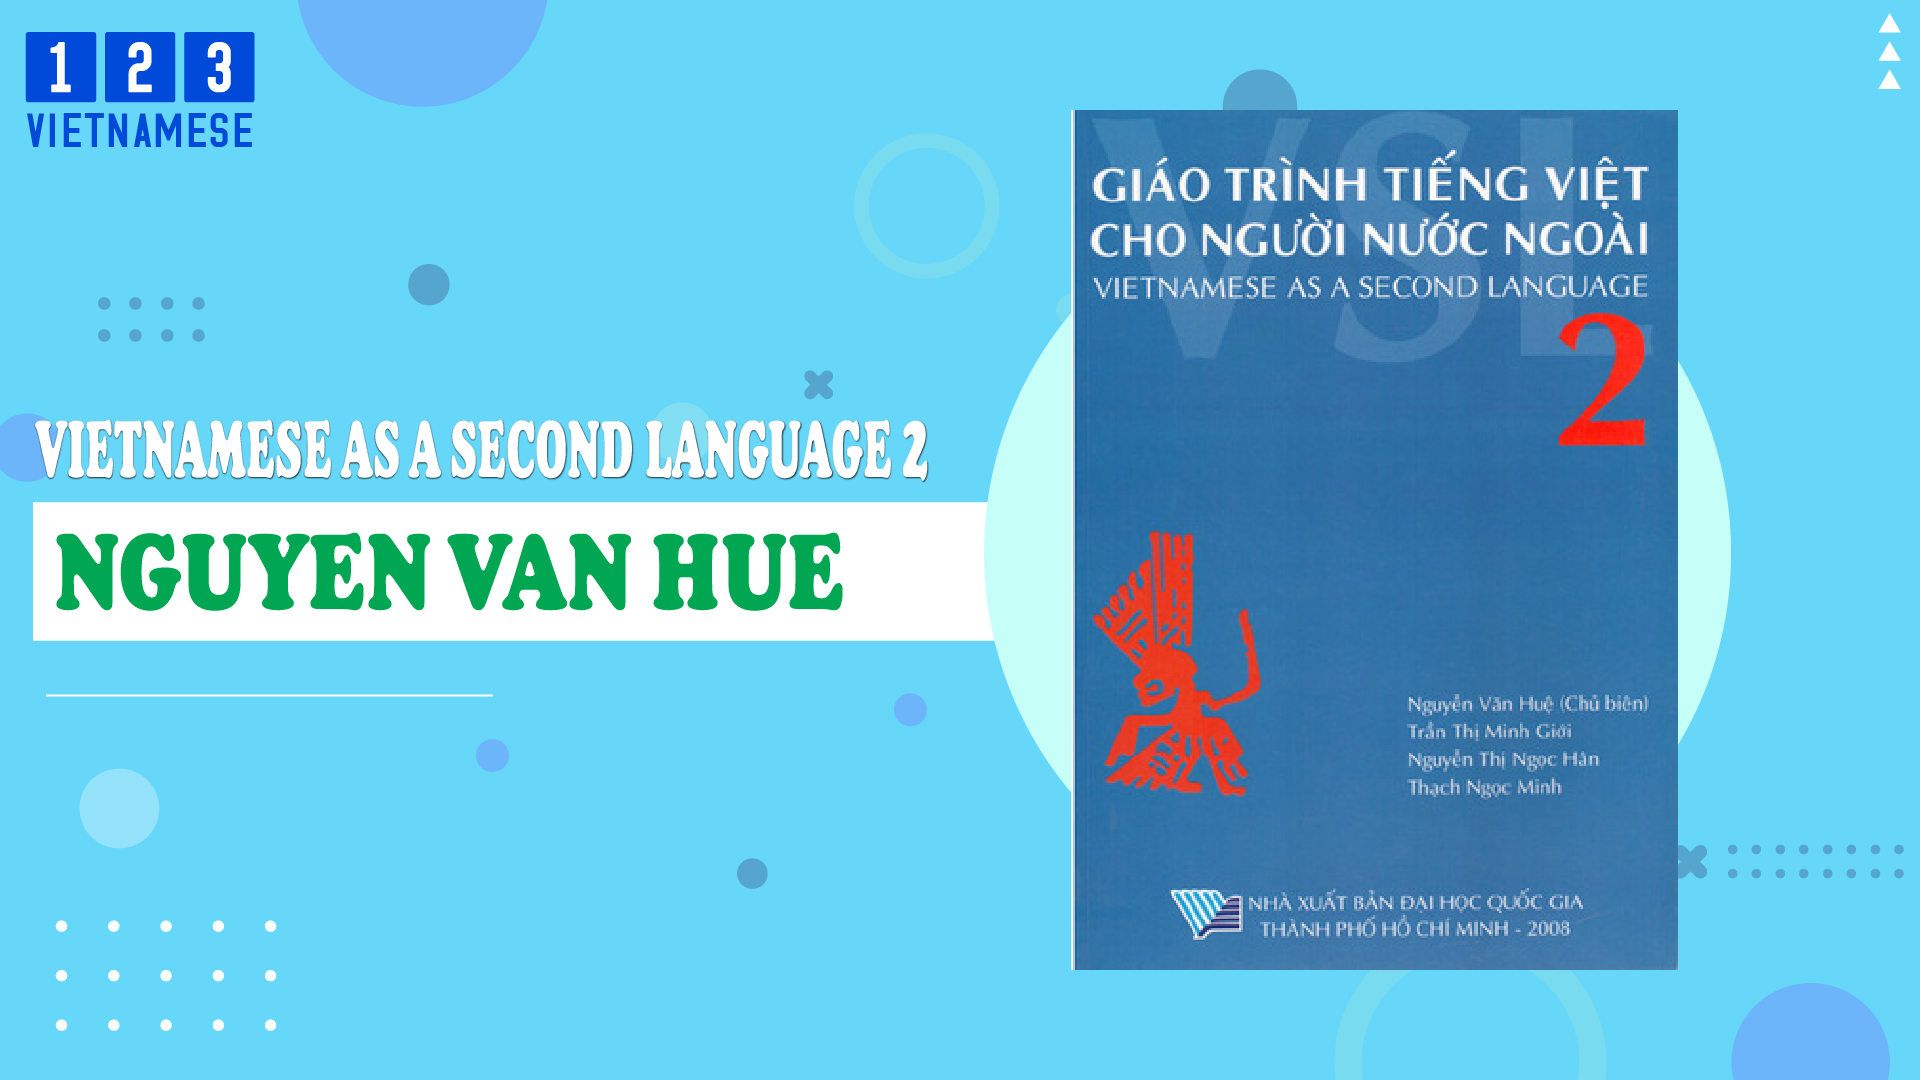 Vietnamese as a Second Language 2 (VSL 2) - Nguyen Van Hue